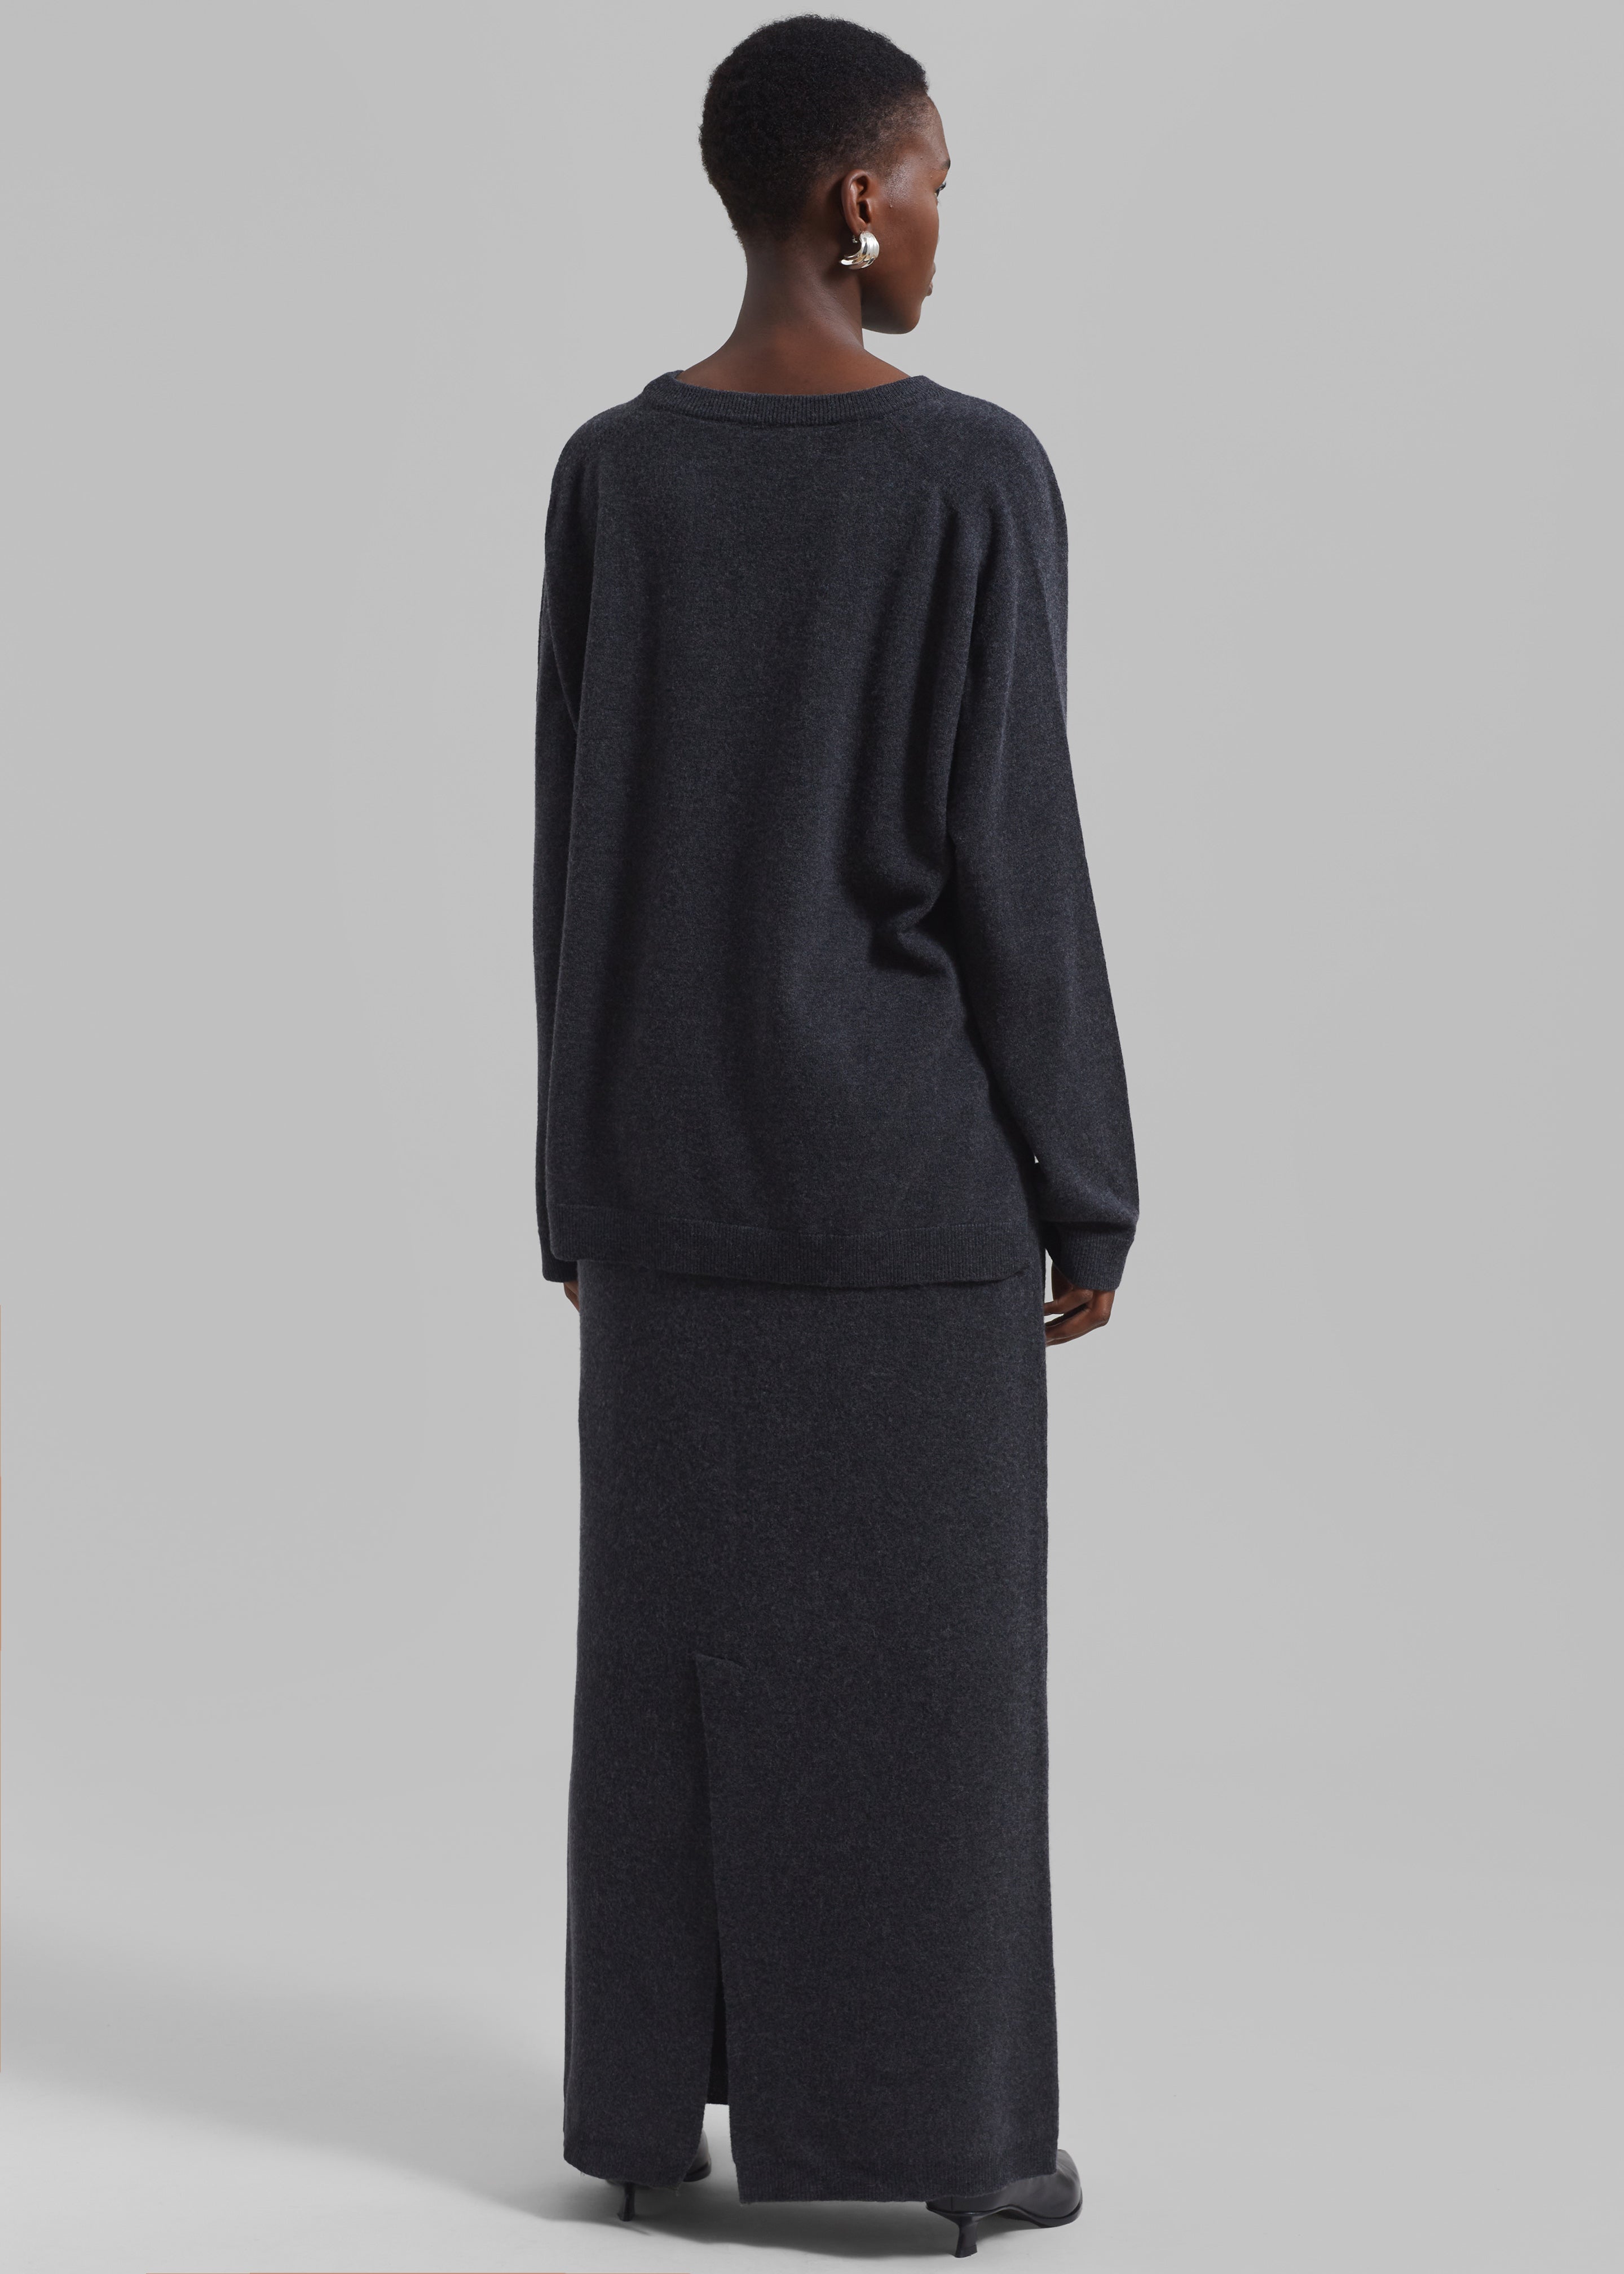 Bellamy Wool Skirt - Charcoal - 8